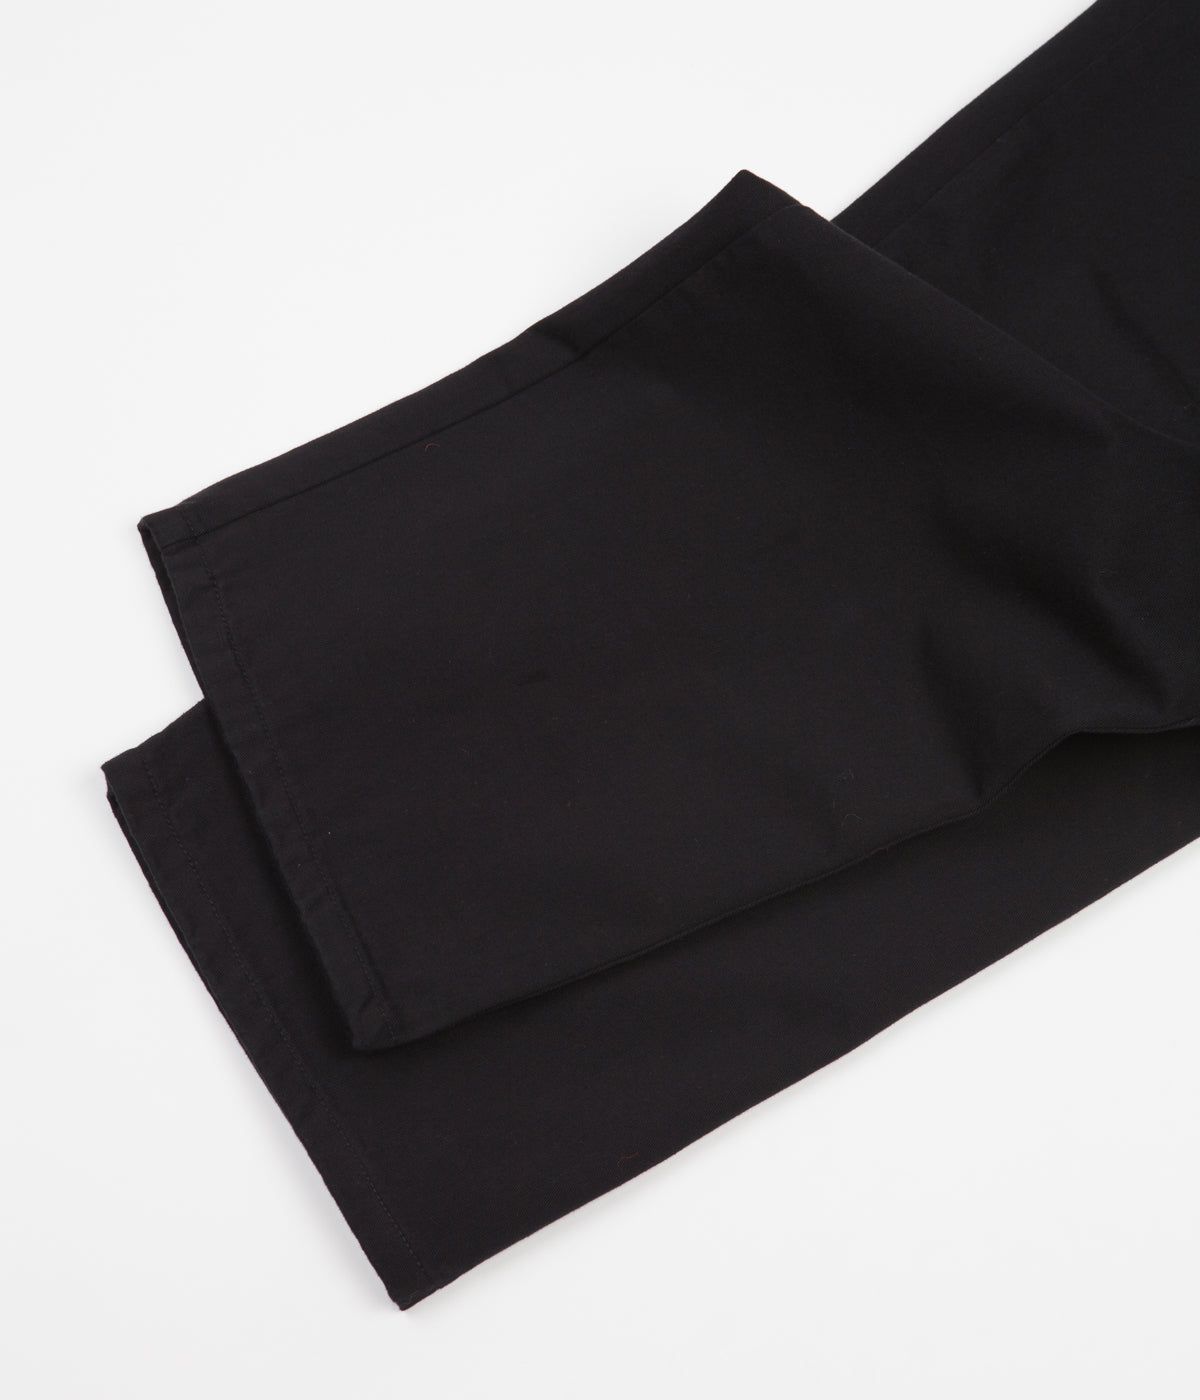 Yardsale Phantasy Cargo Pants - Black | Flatspot